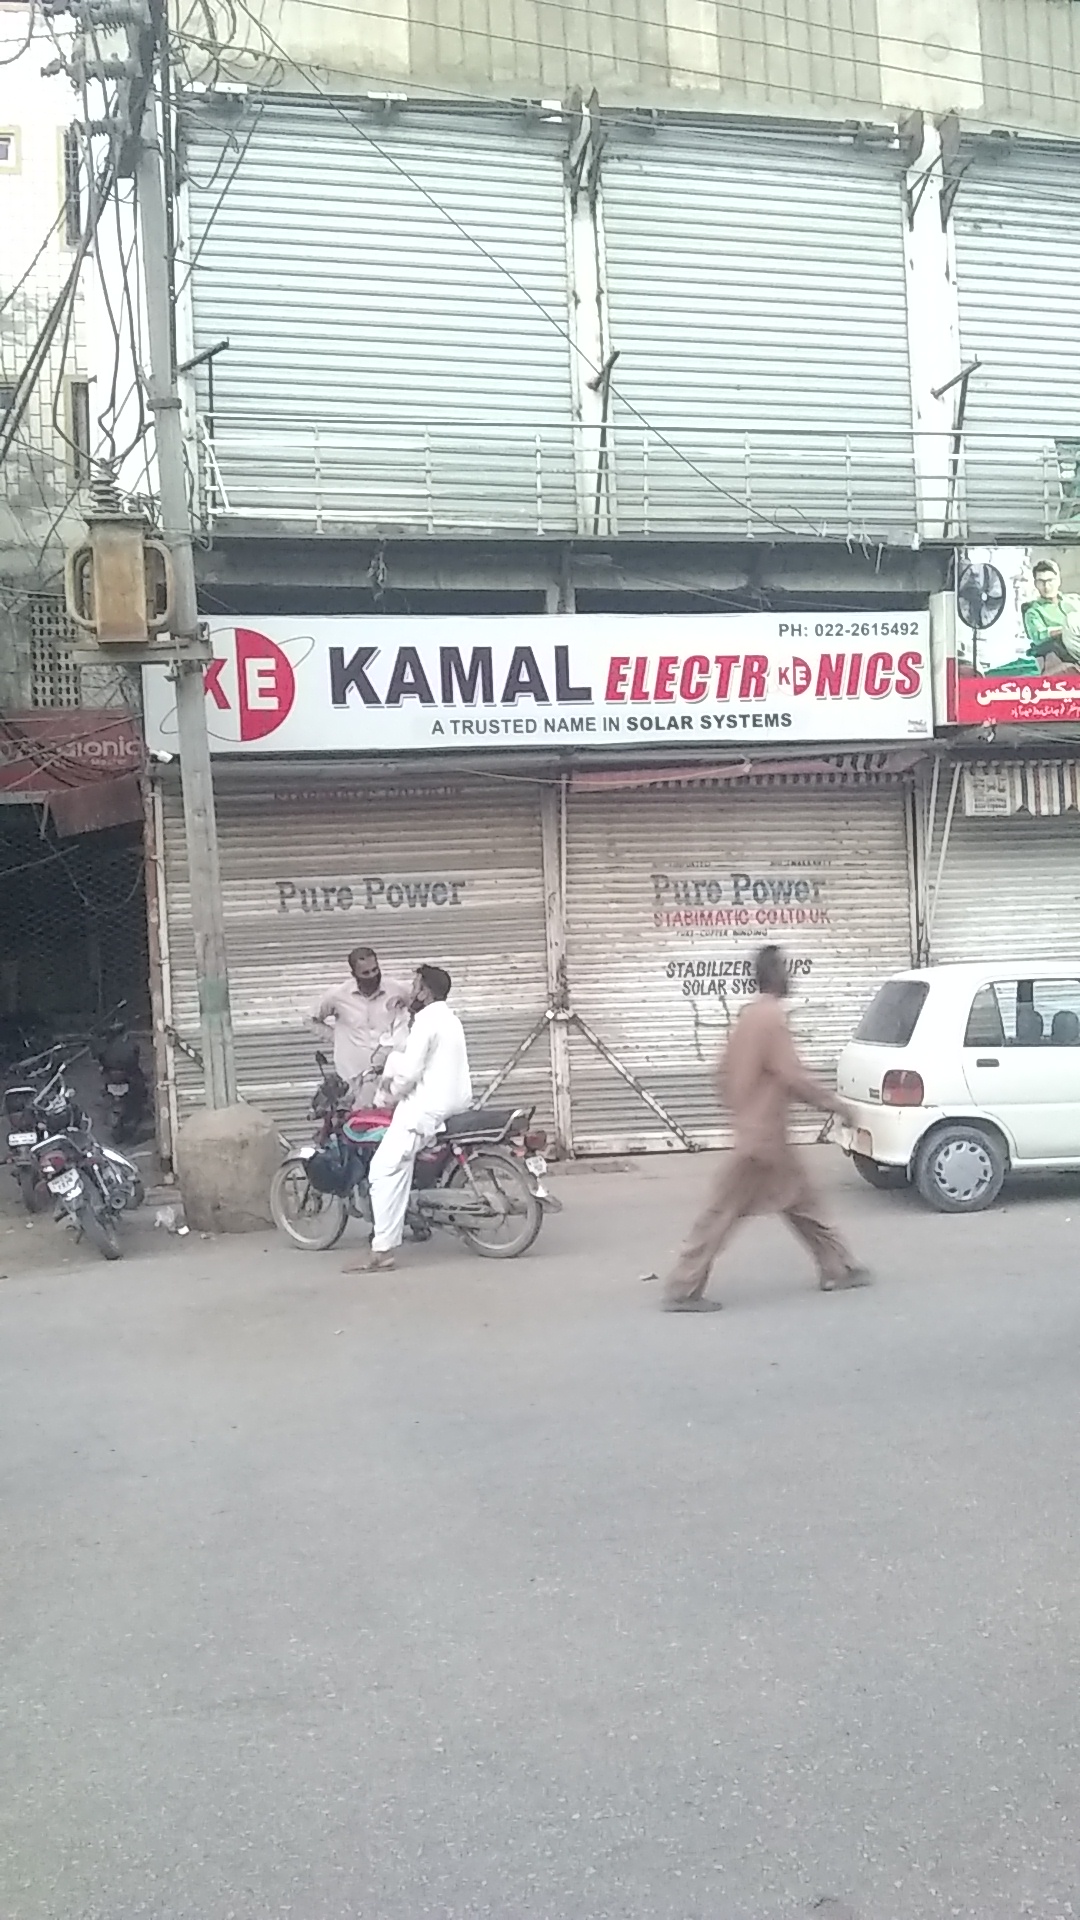 Kamal electronics